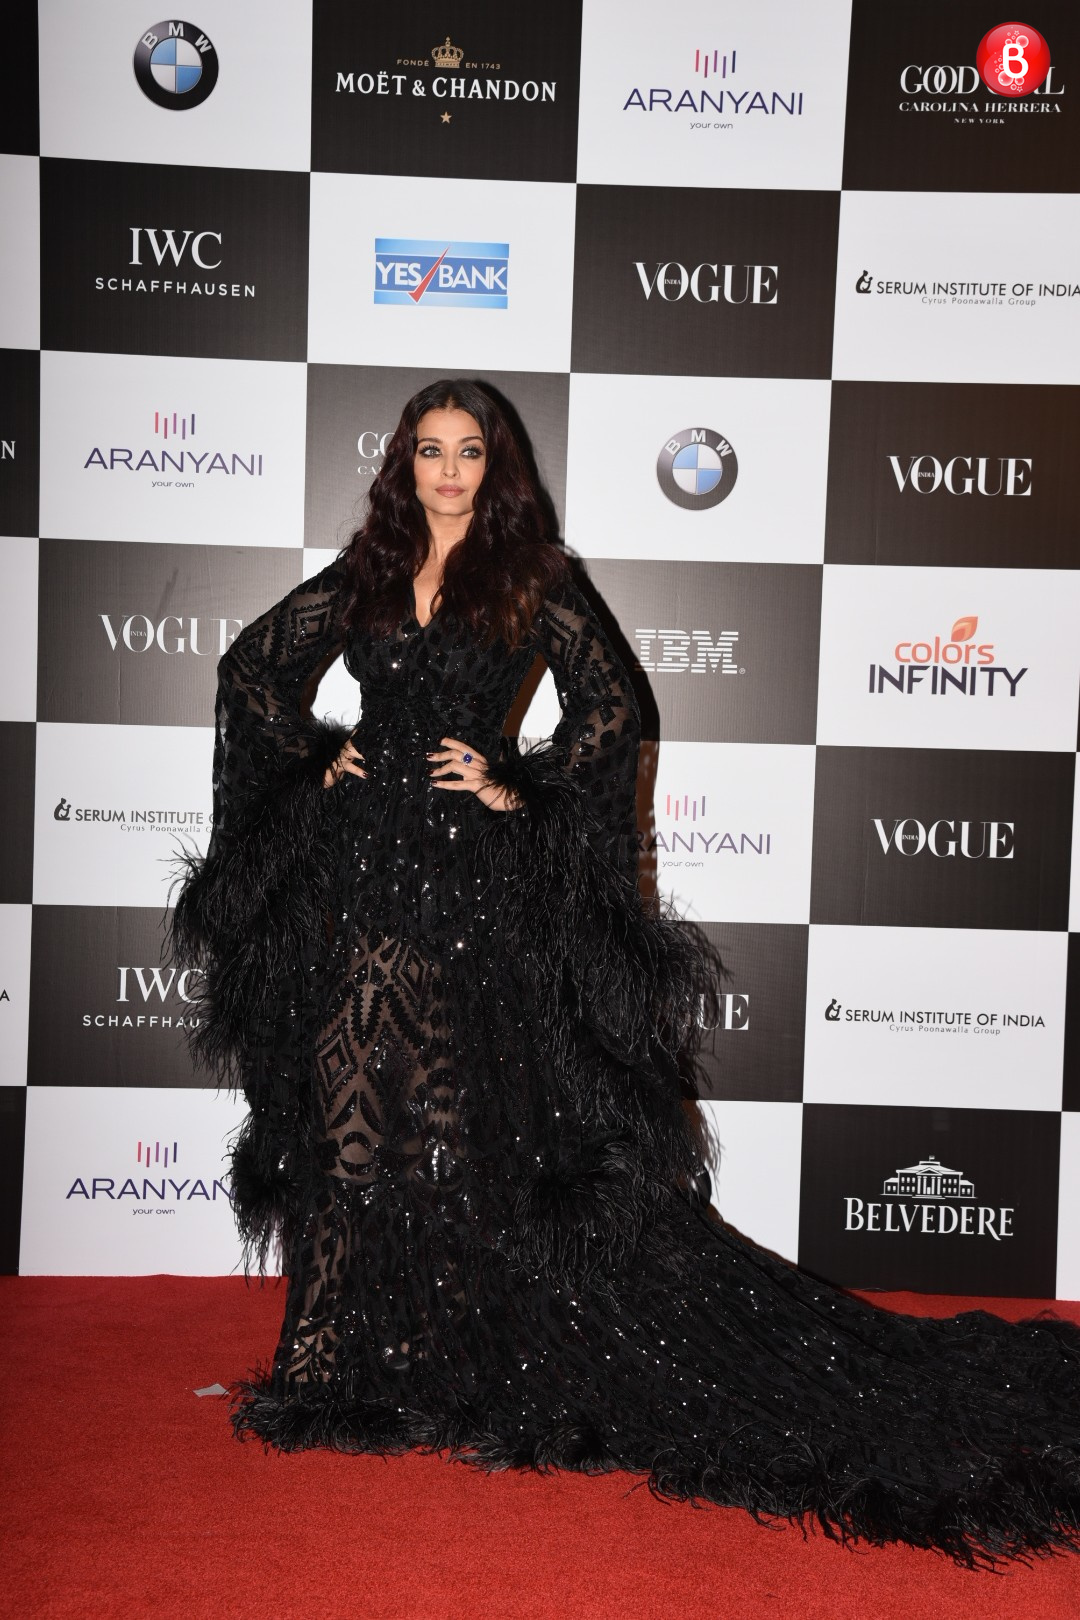 Aishwarya Rai Bachchan, Priyanka Chopra, Katrina Kaif: Celebs look stunning in black on red carpet 1